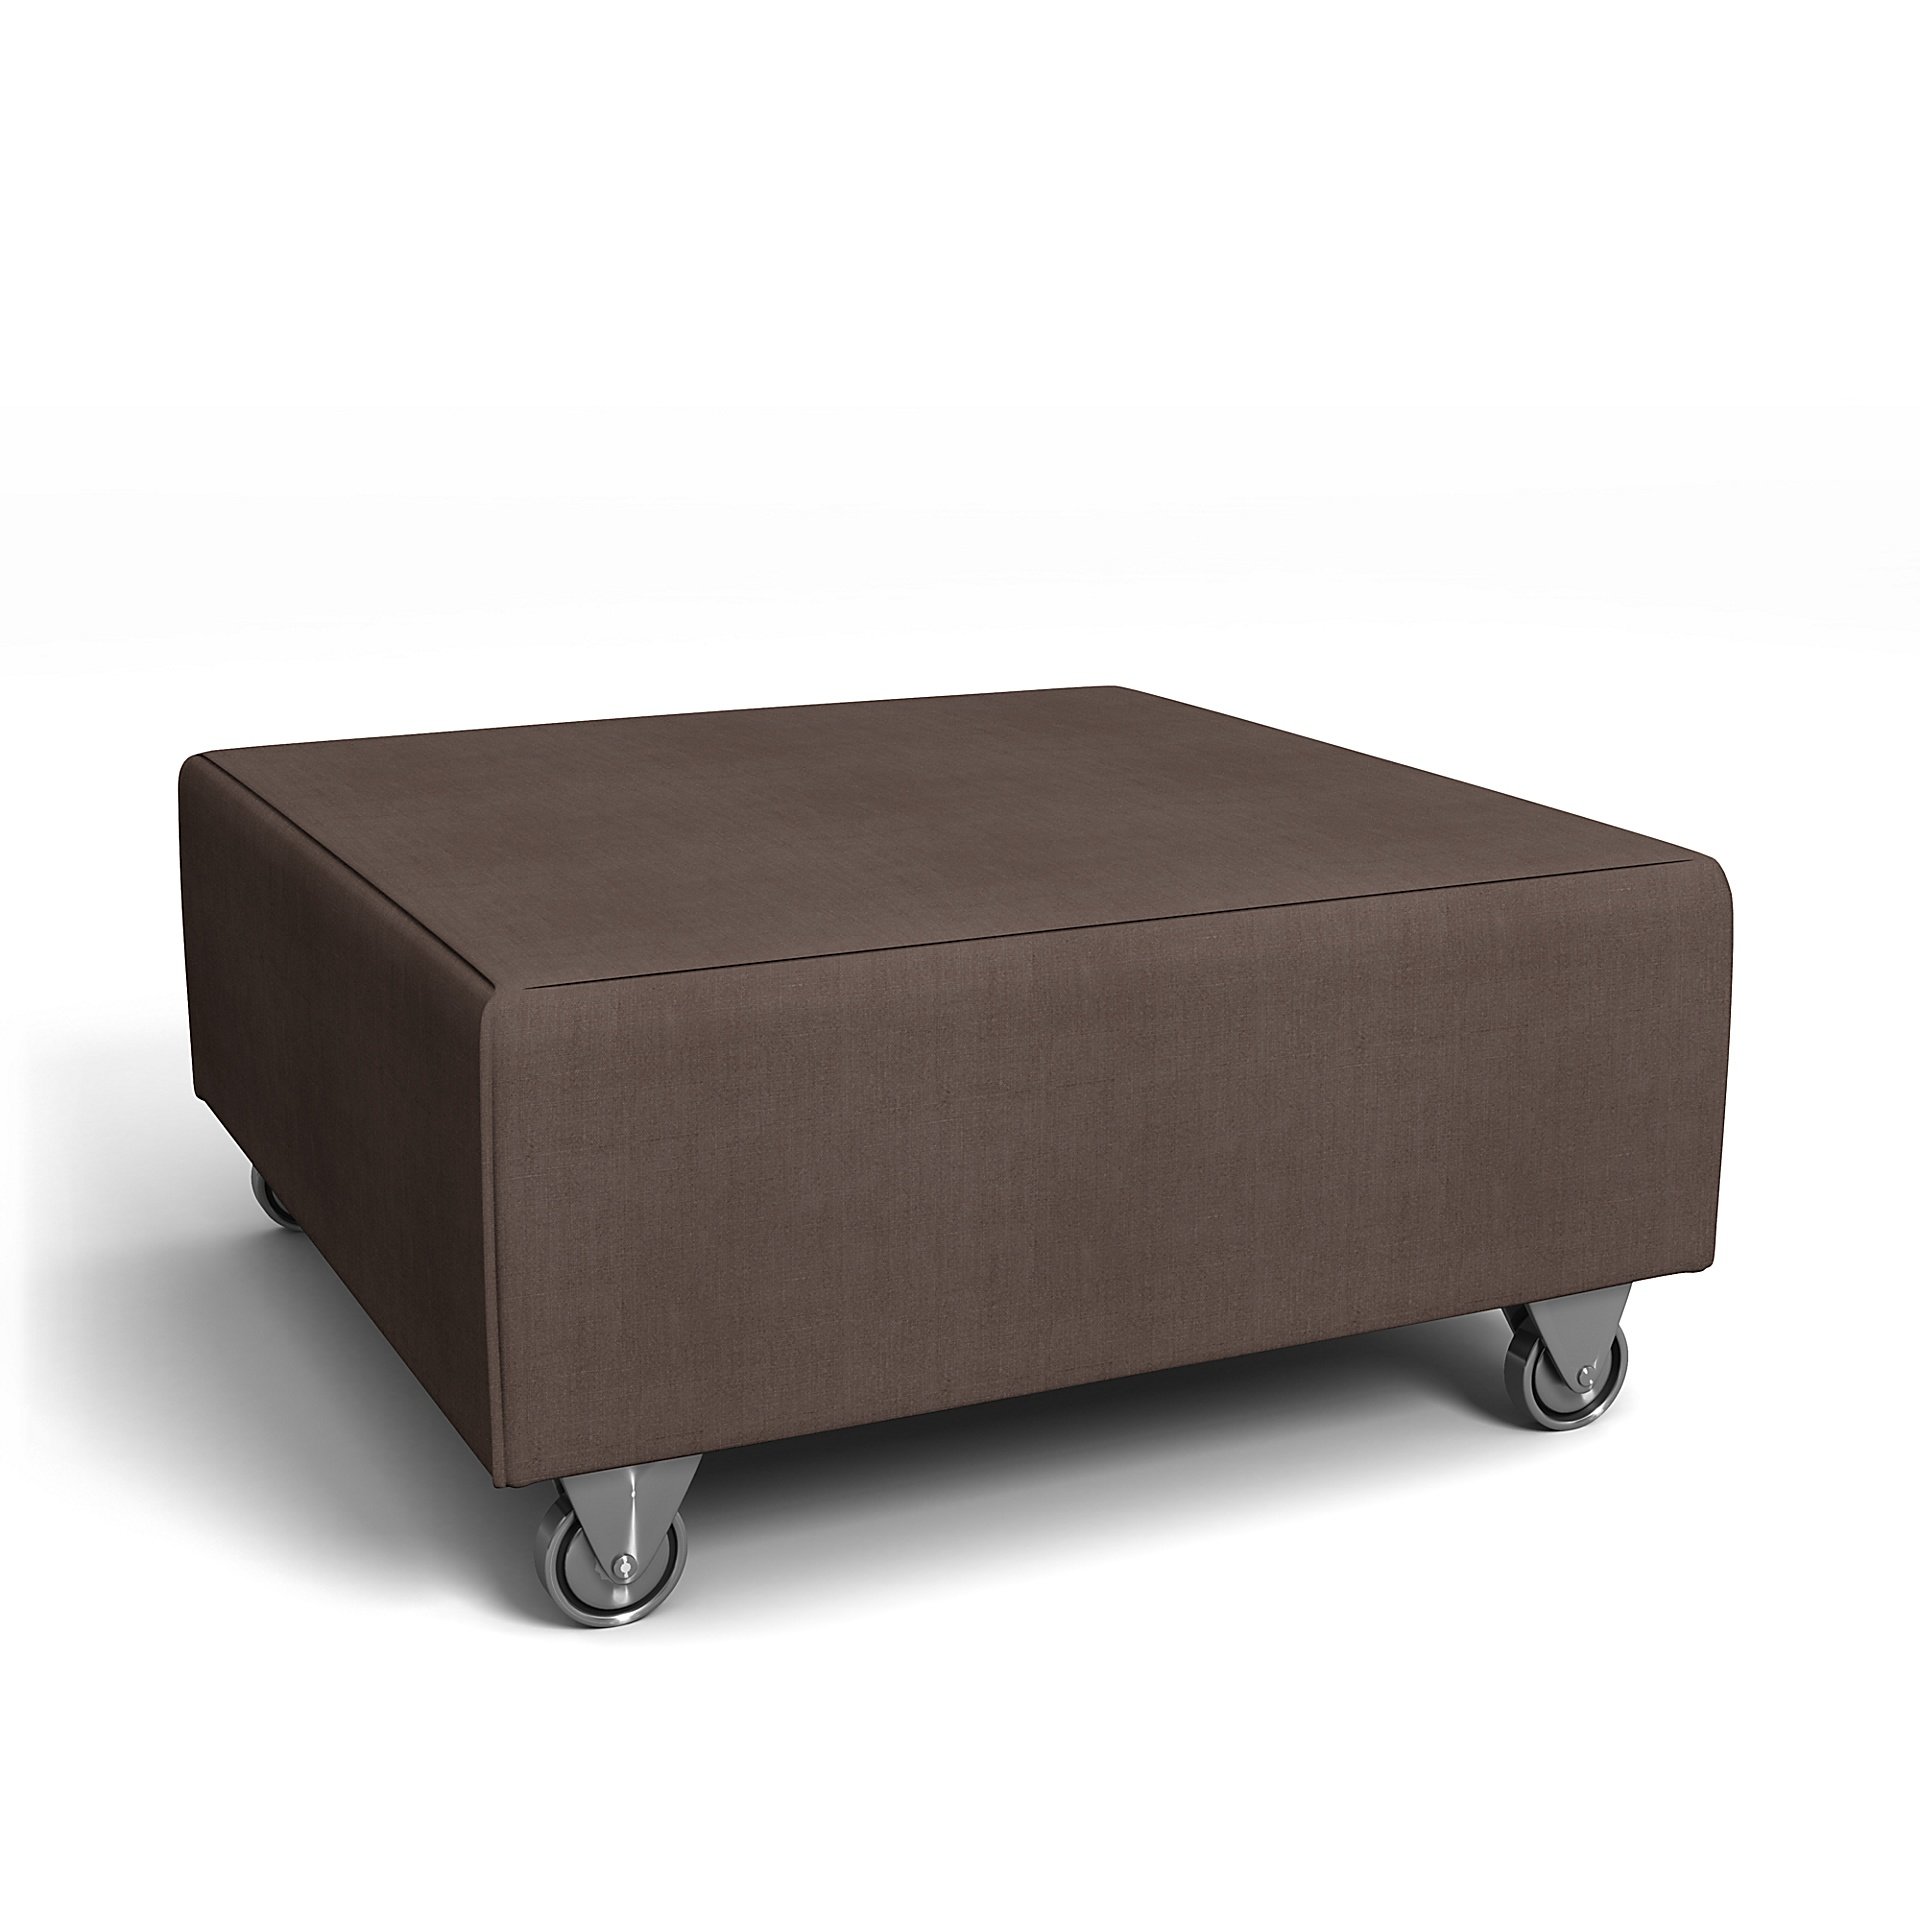 IKEA - Falsterbo Footstool Cover, Cocoa, Linen - Bemz